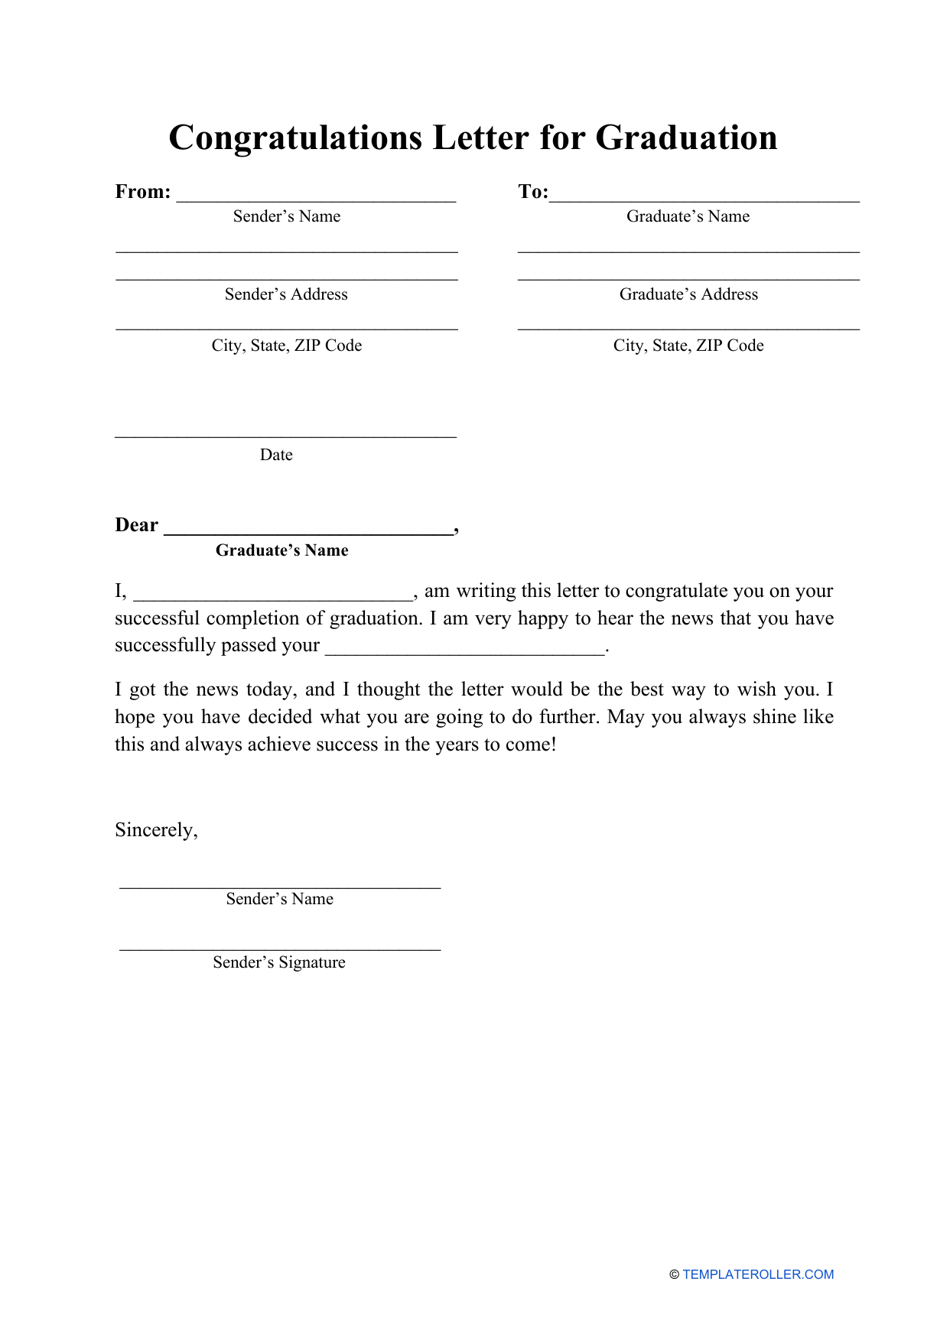 congratulations-letter-for-graduation-template-download-printable-pdf